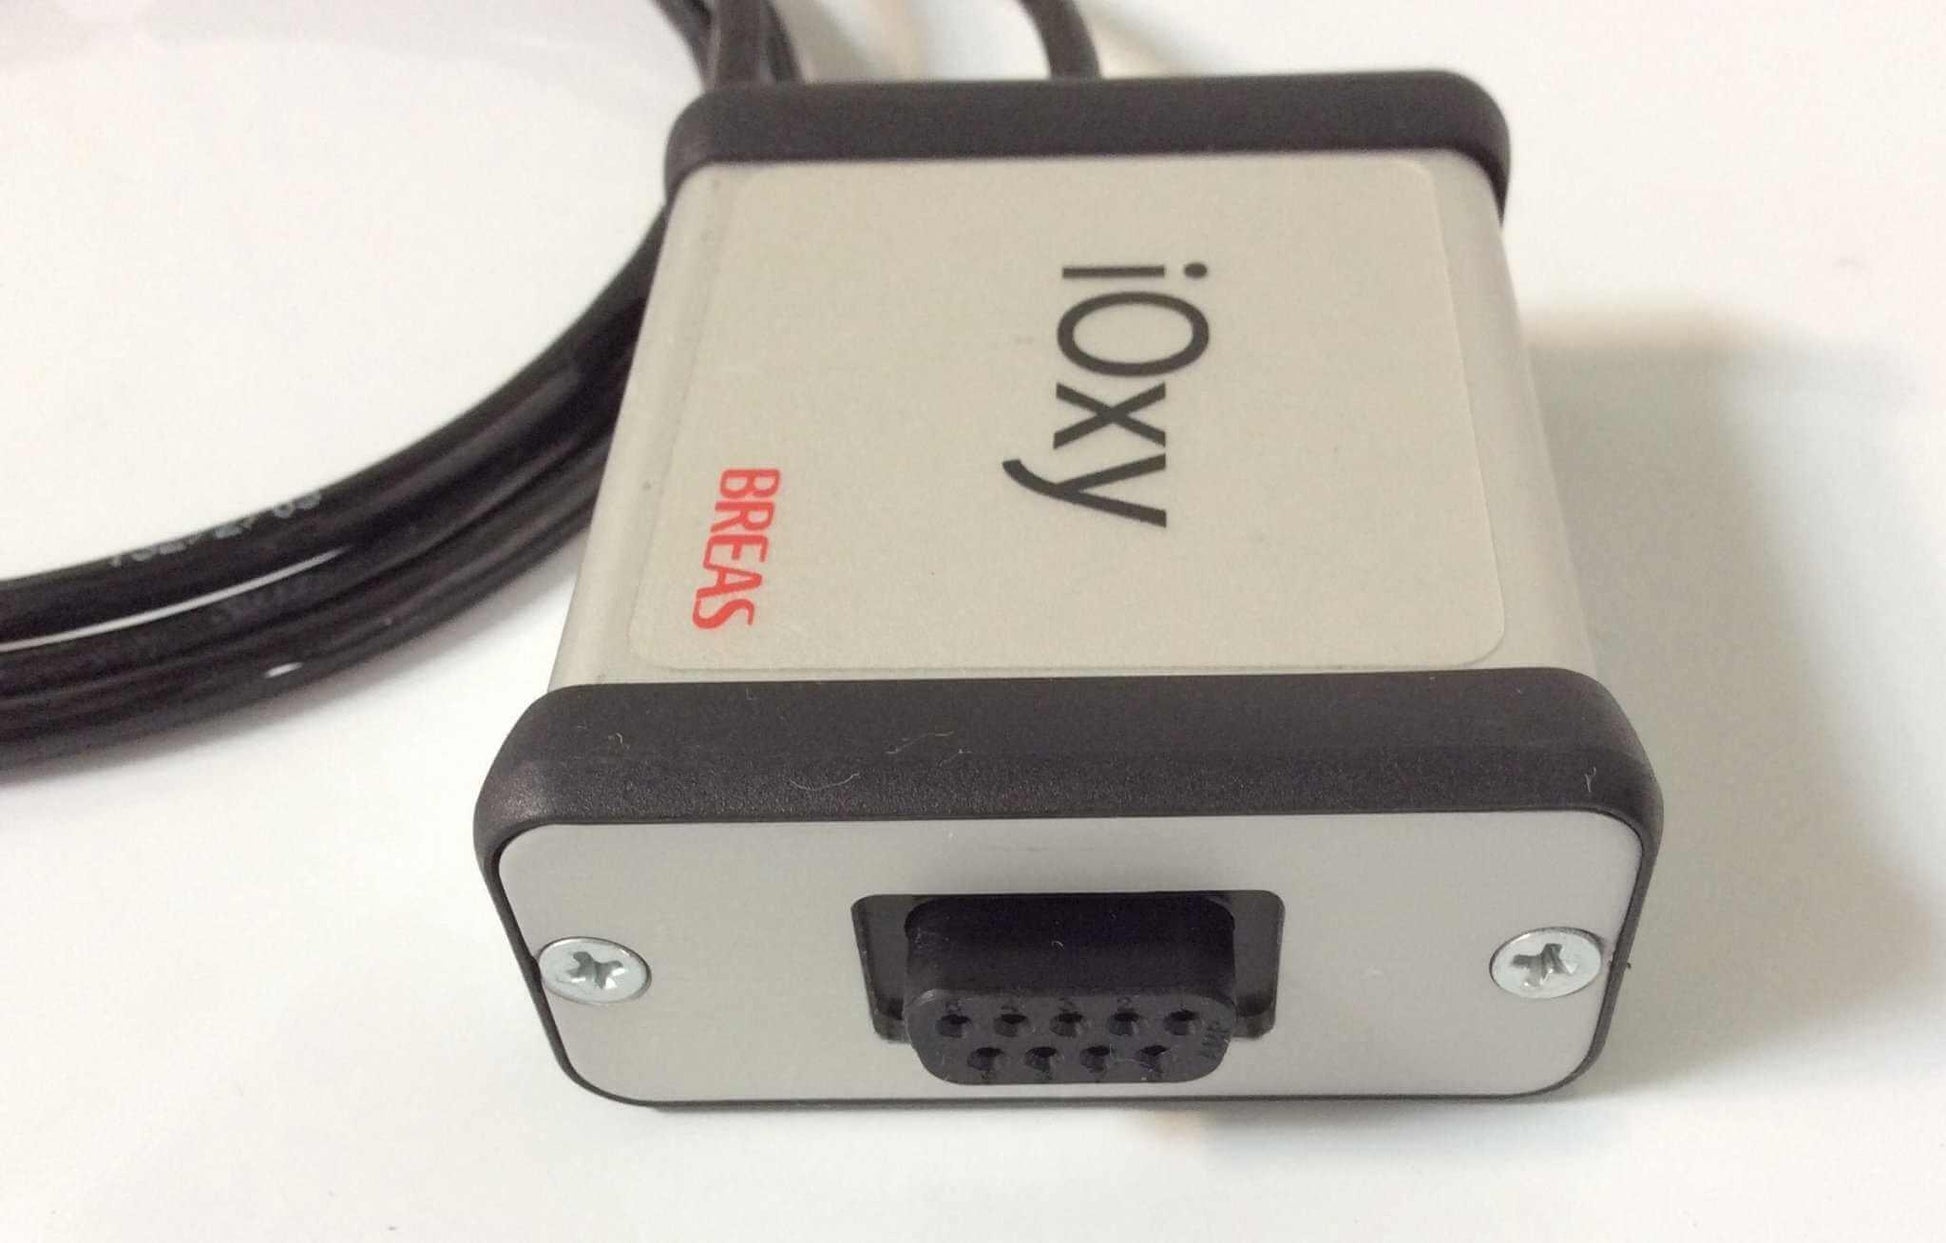 USED Breas HDM iOxy Pulse Oximeter Sensor with Nonin Purelight SpO2 Flex Finger Probe Kit 005067 004874 002063 Warranty FREE Shipping - MBR Medicals